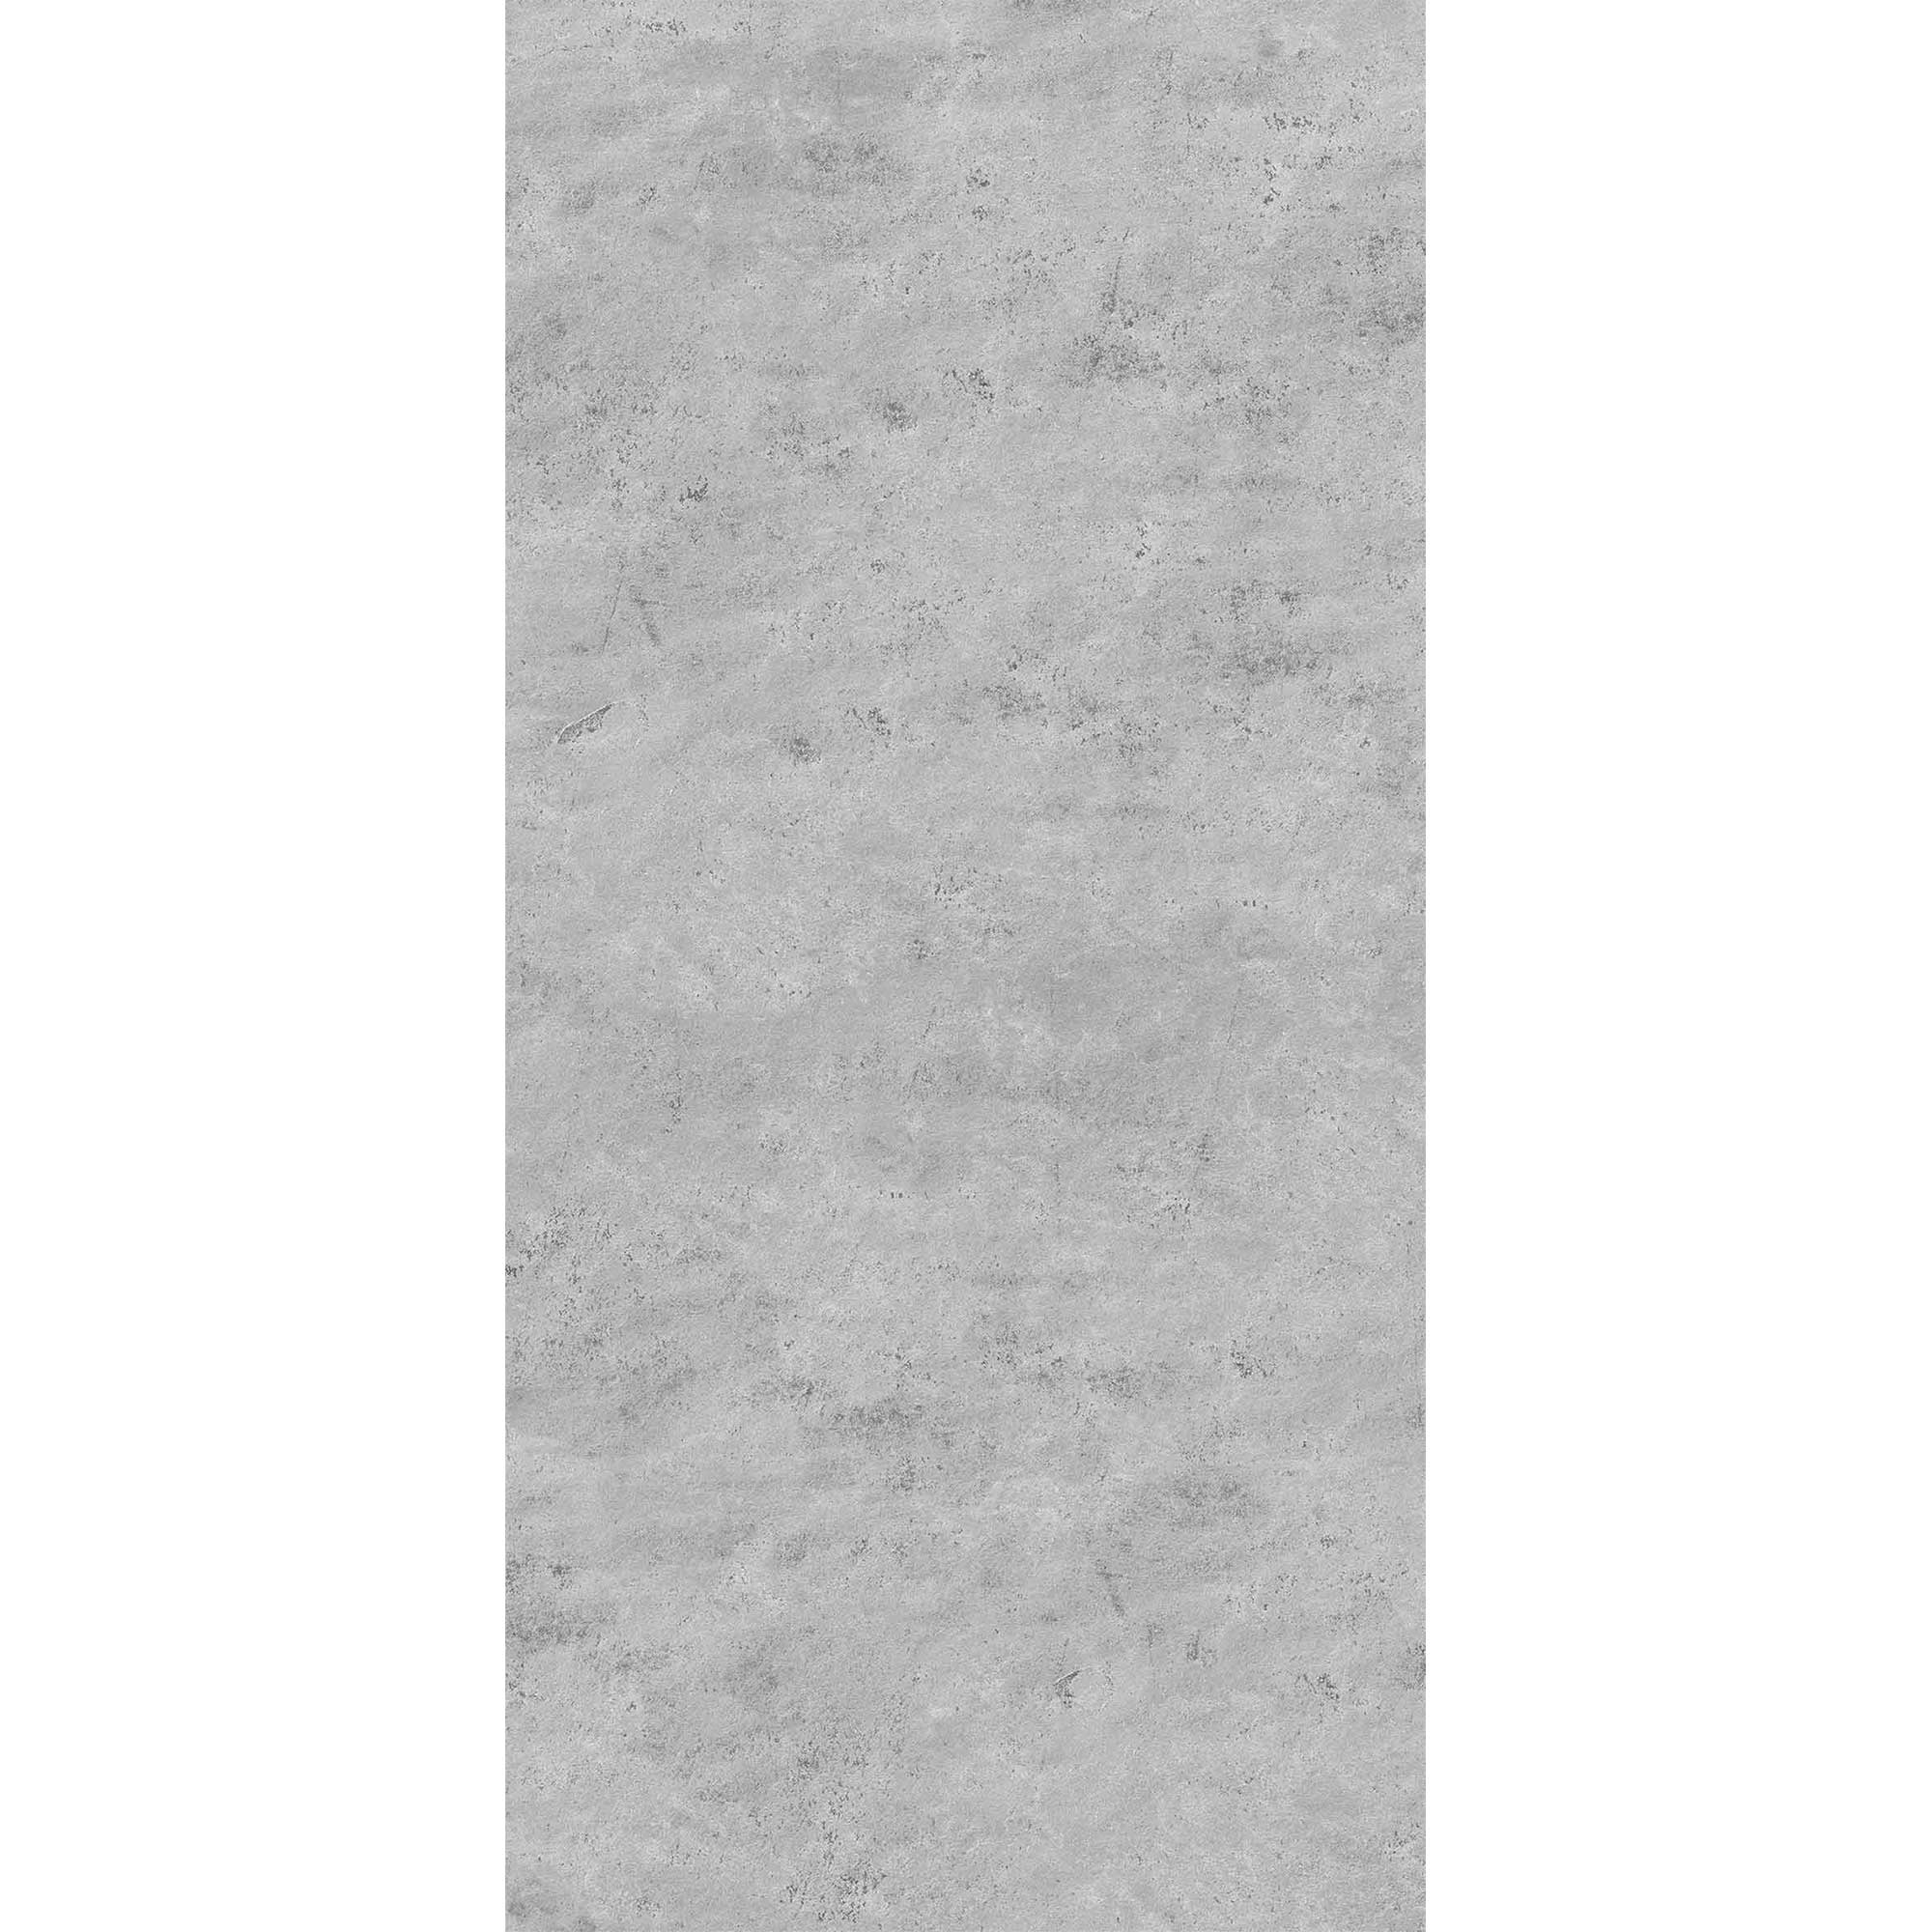 Duschrückwand Softtouch Marmoroptik grau 100 x 255 cm + product picture